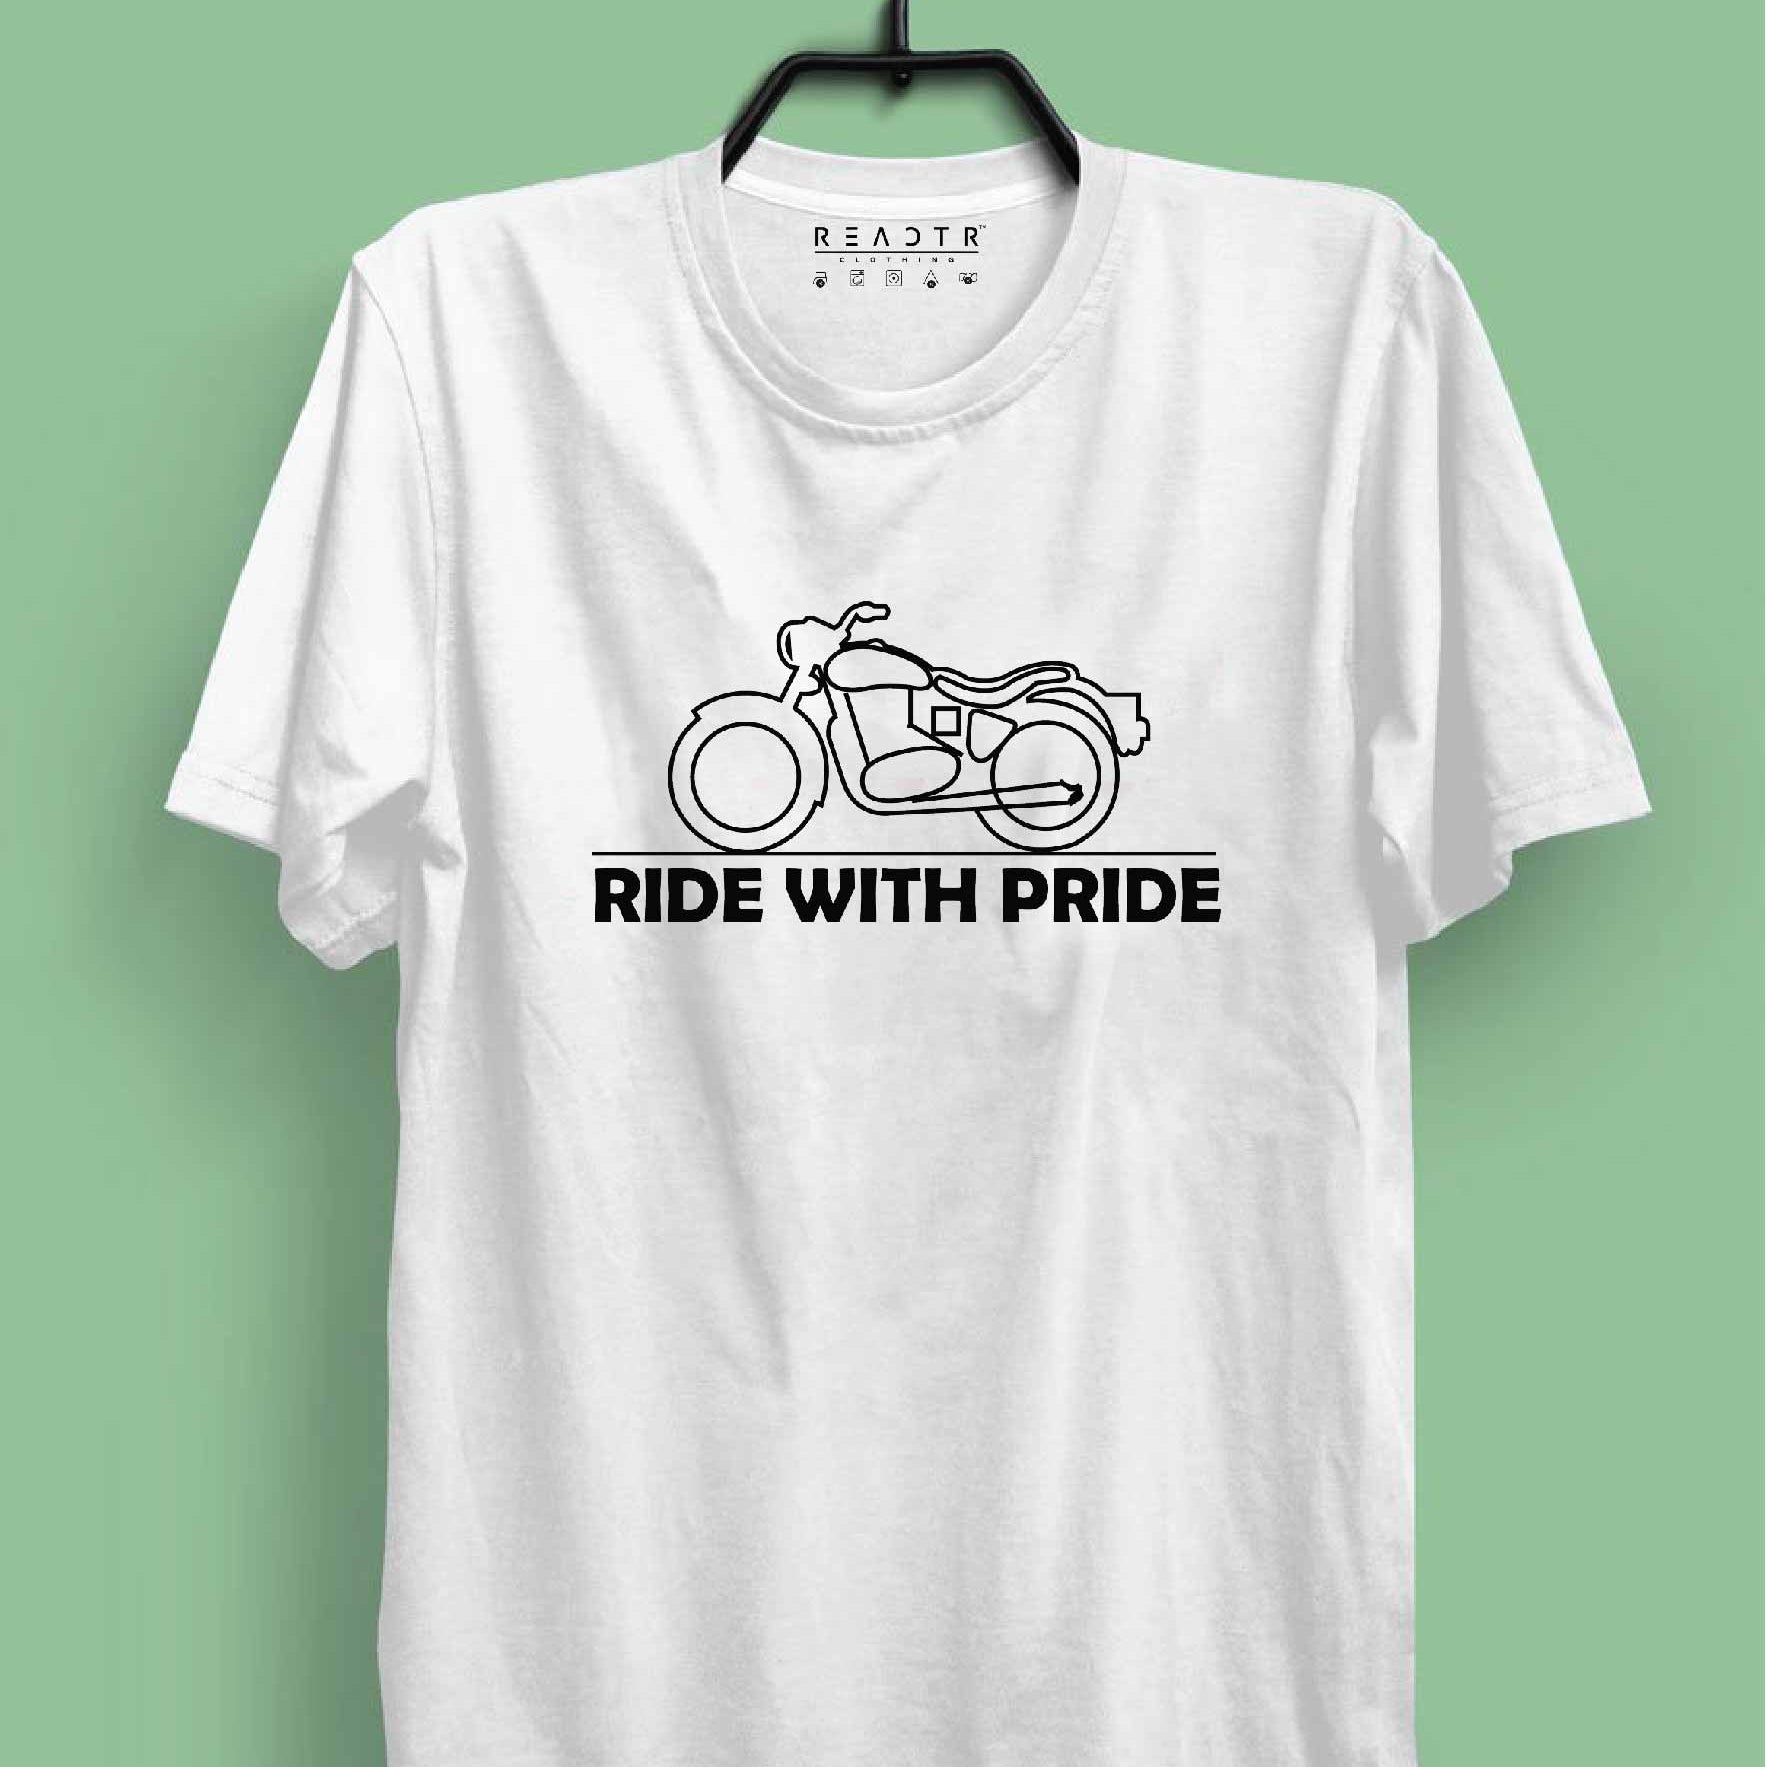 Ride With Pride Reactr Tshirts For Men - Eyewearlabs